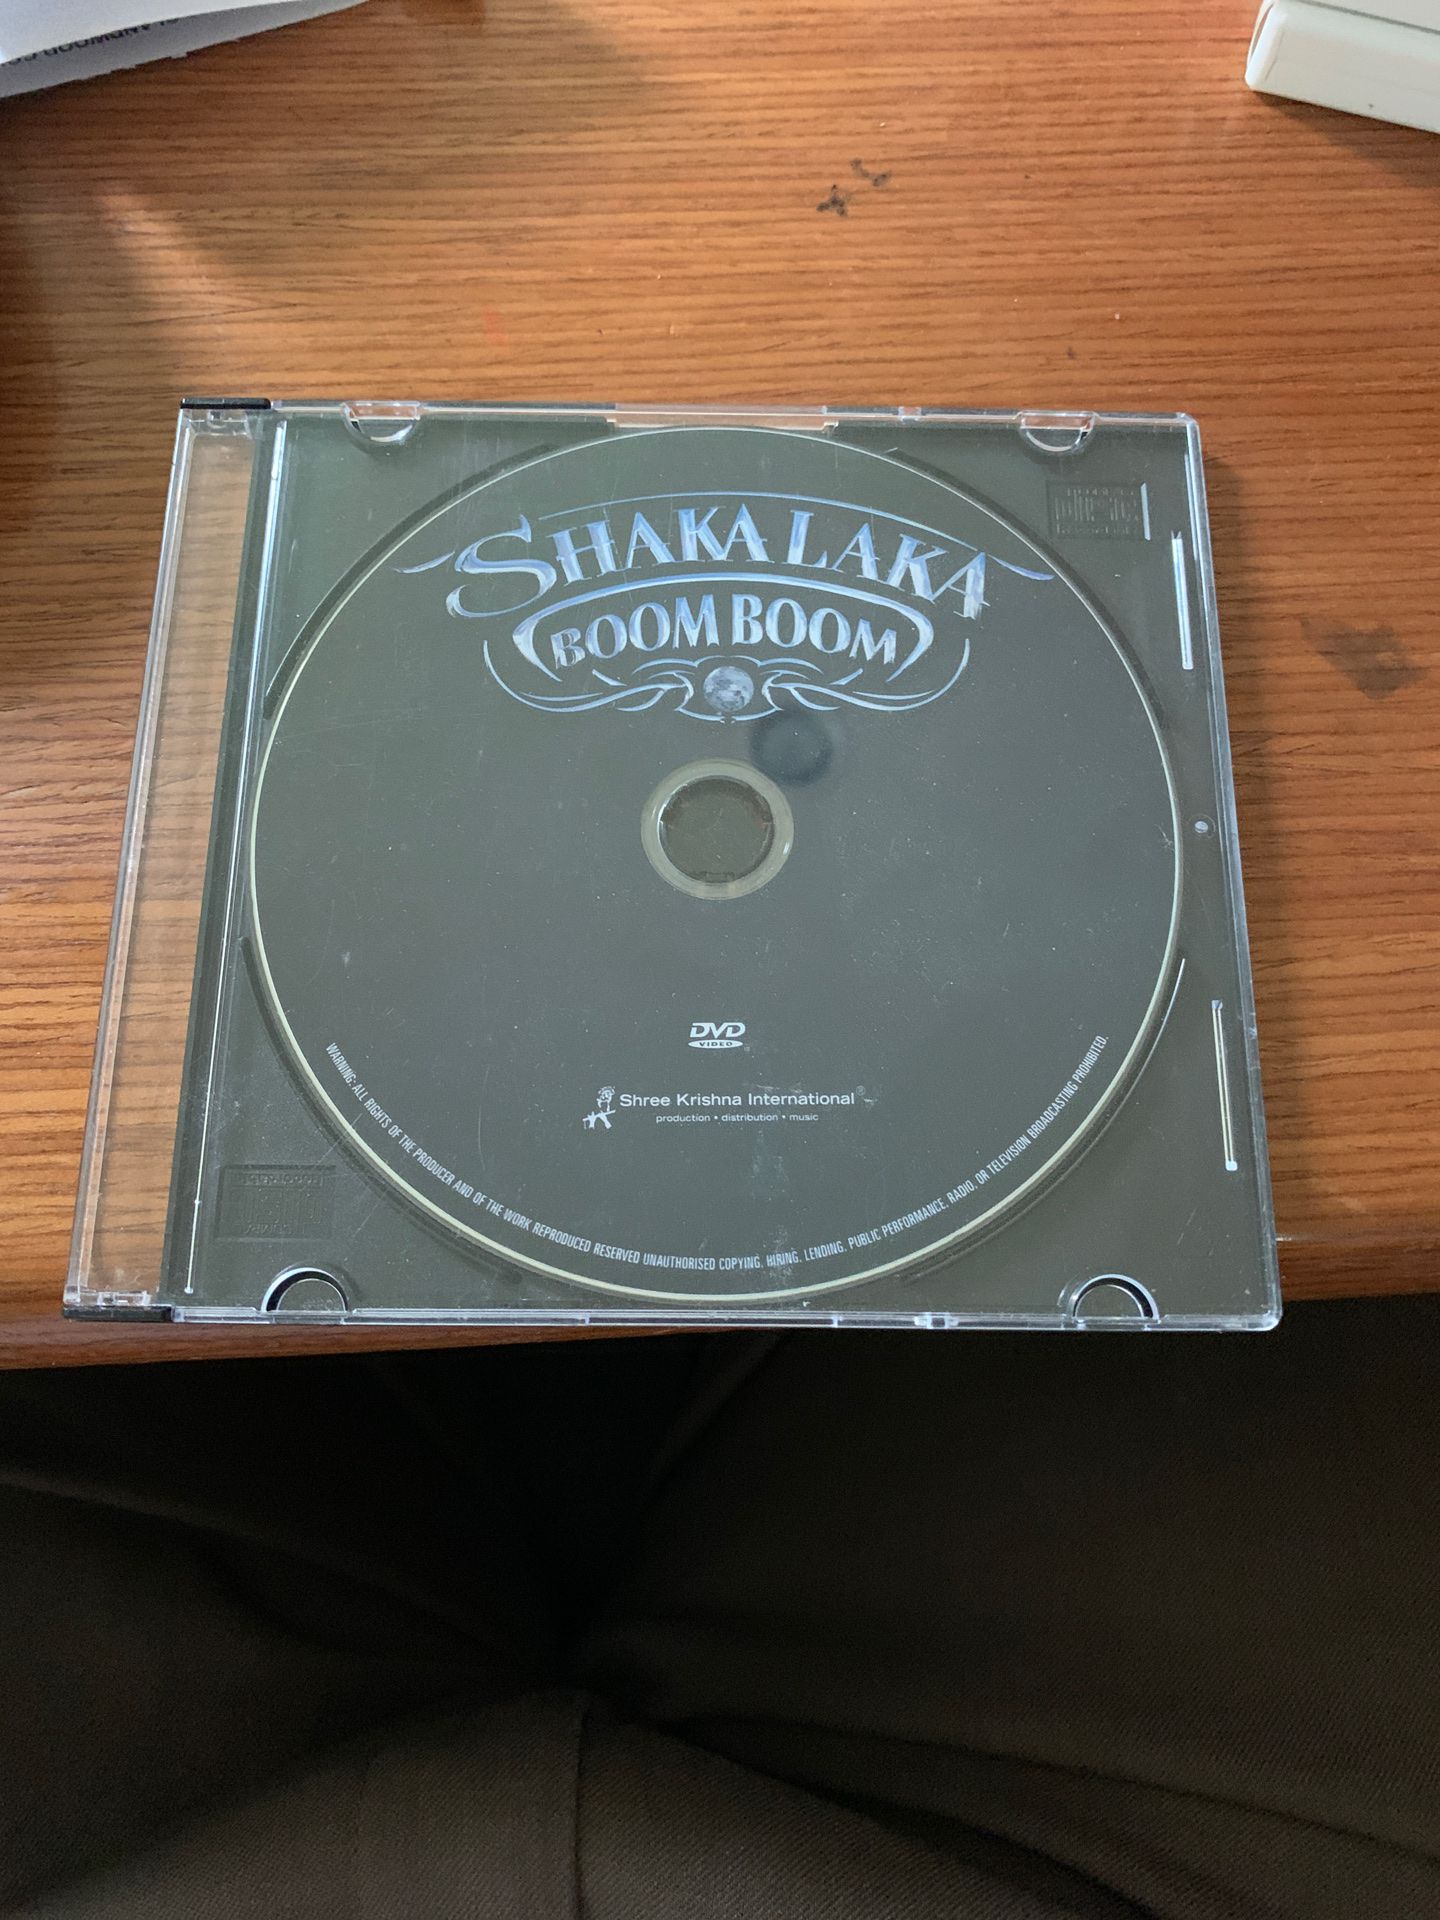 Free DVD of “Shakalaka Boom Boom” Movie